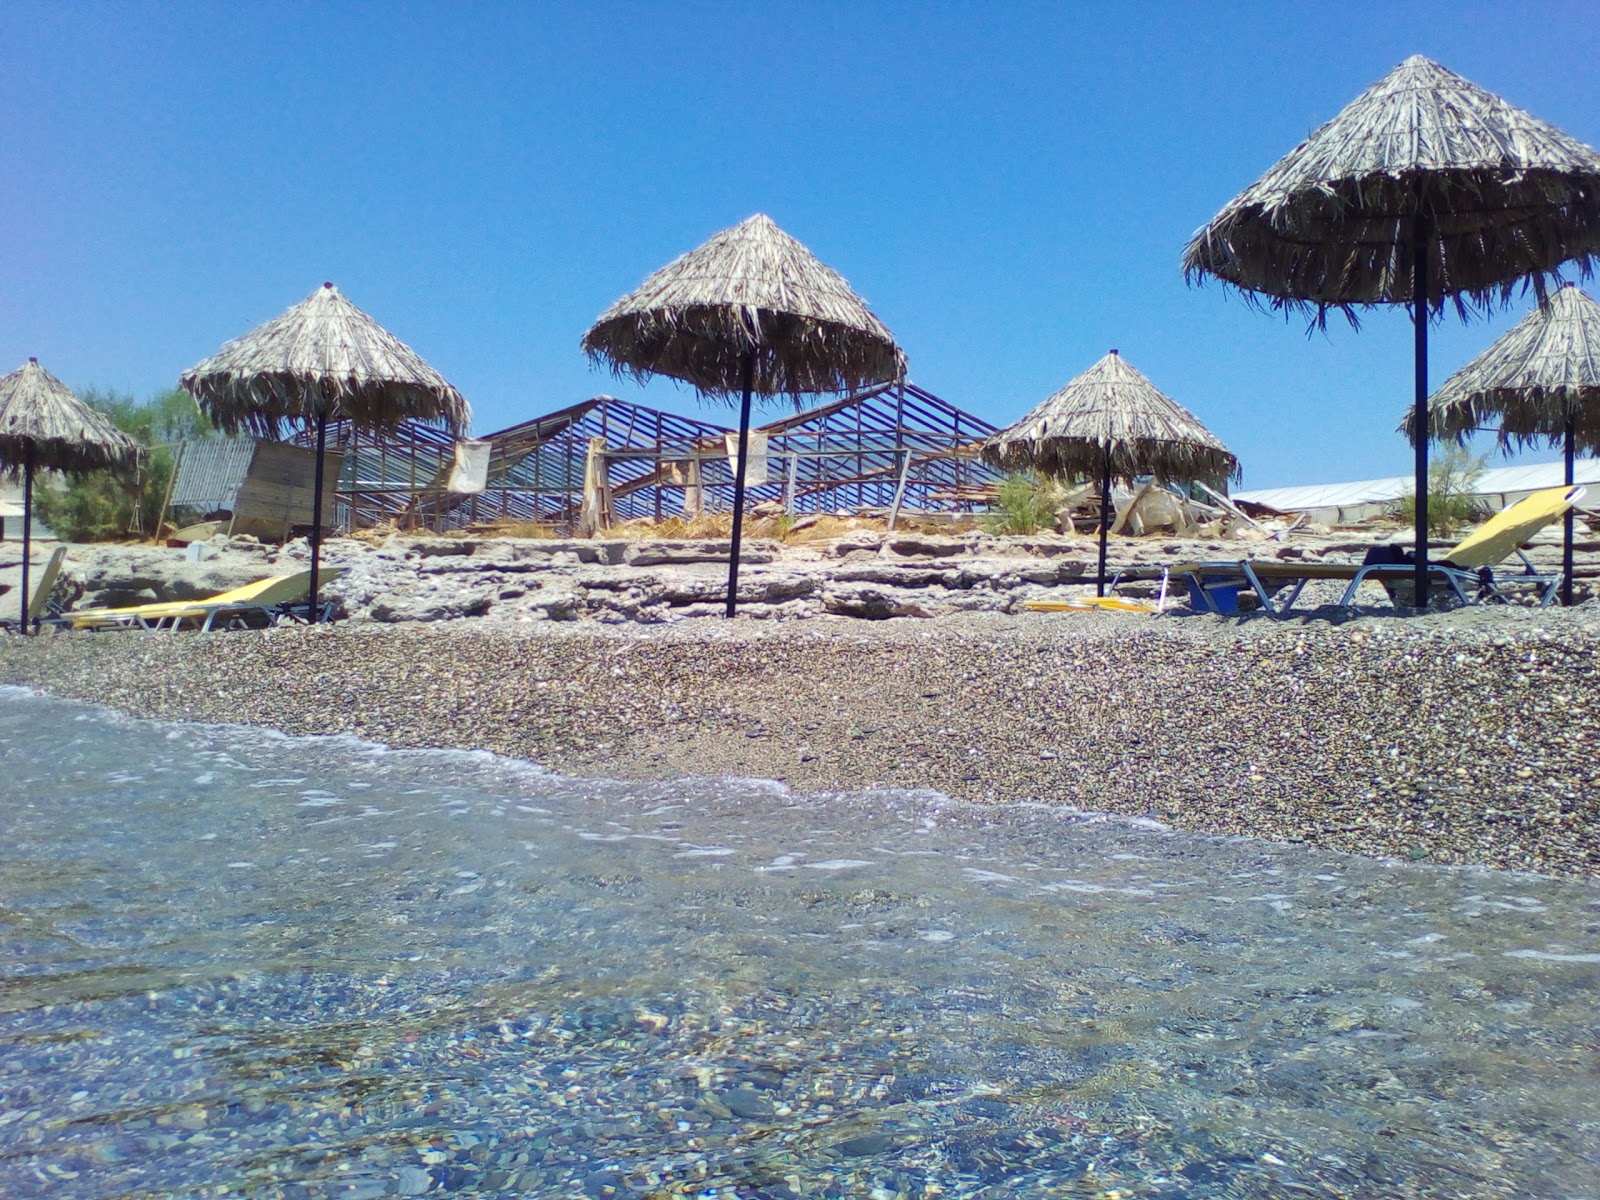 Foto av Koutsoureli beach med turkos rent vatten yta